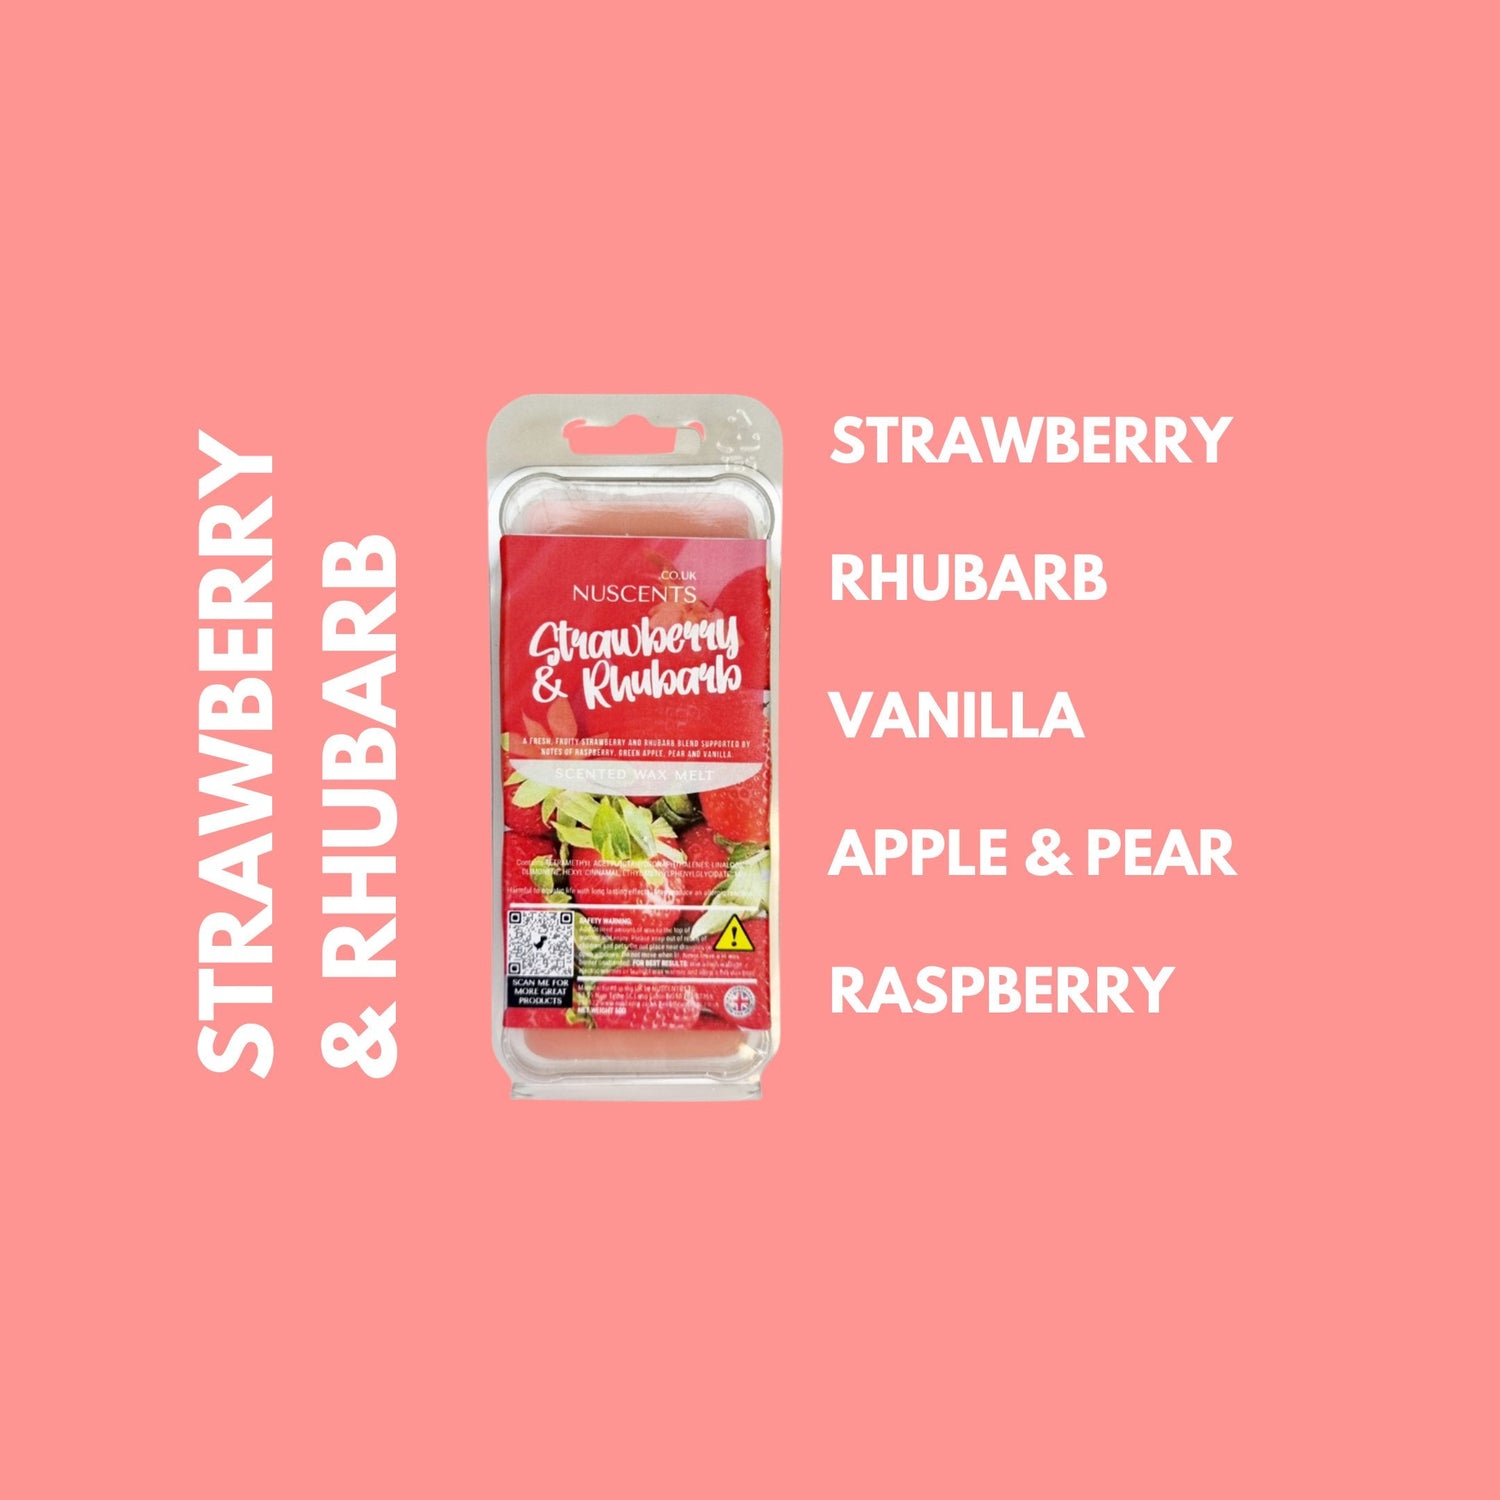 Strawberry & Rhubarb Wax Melt Scent Notes